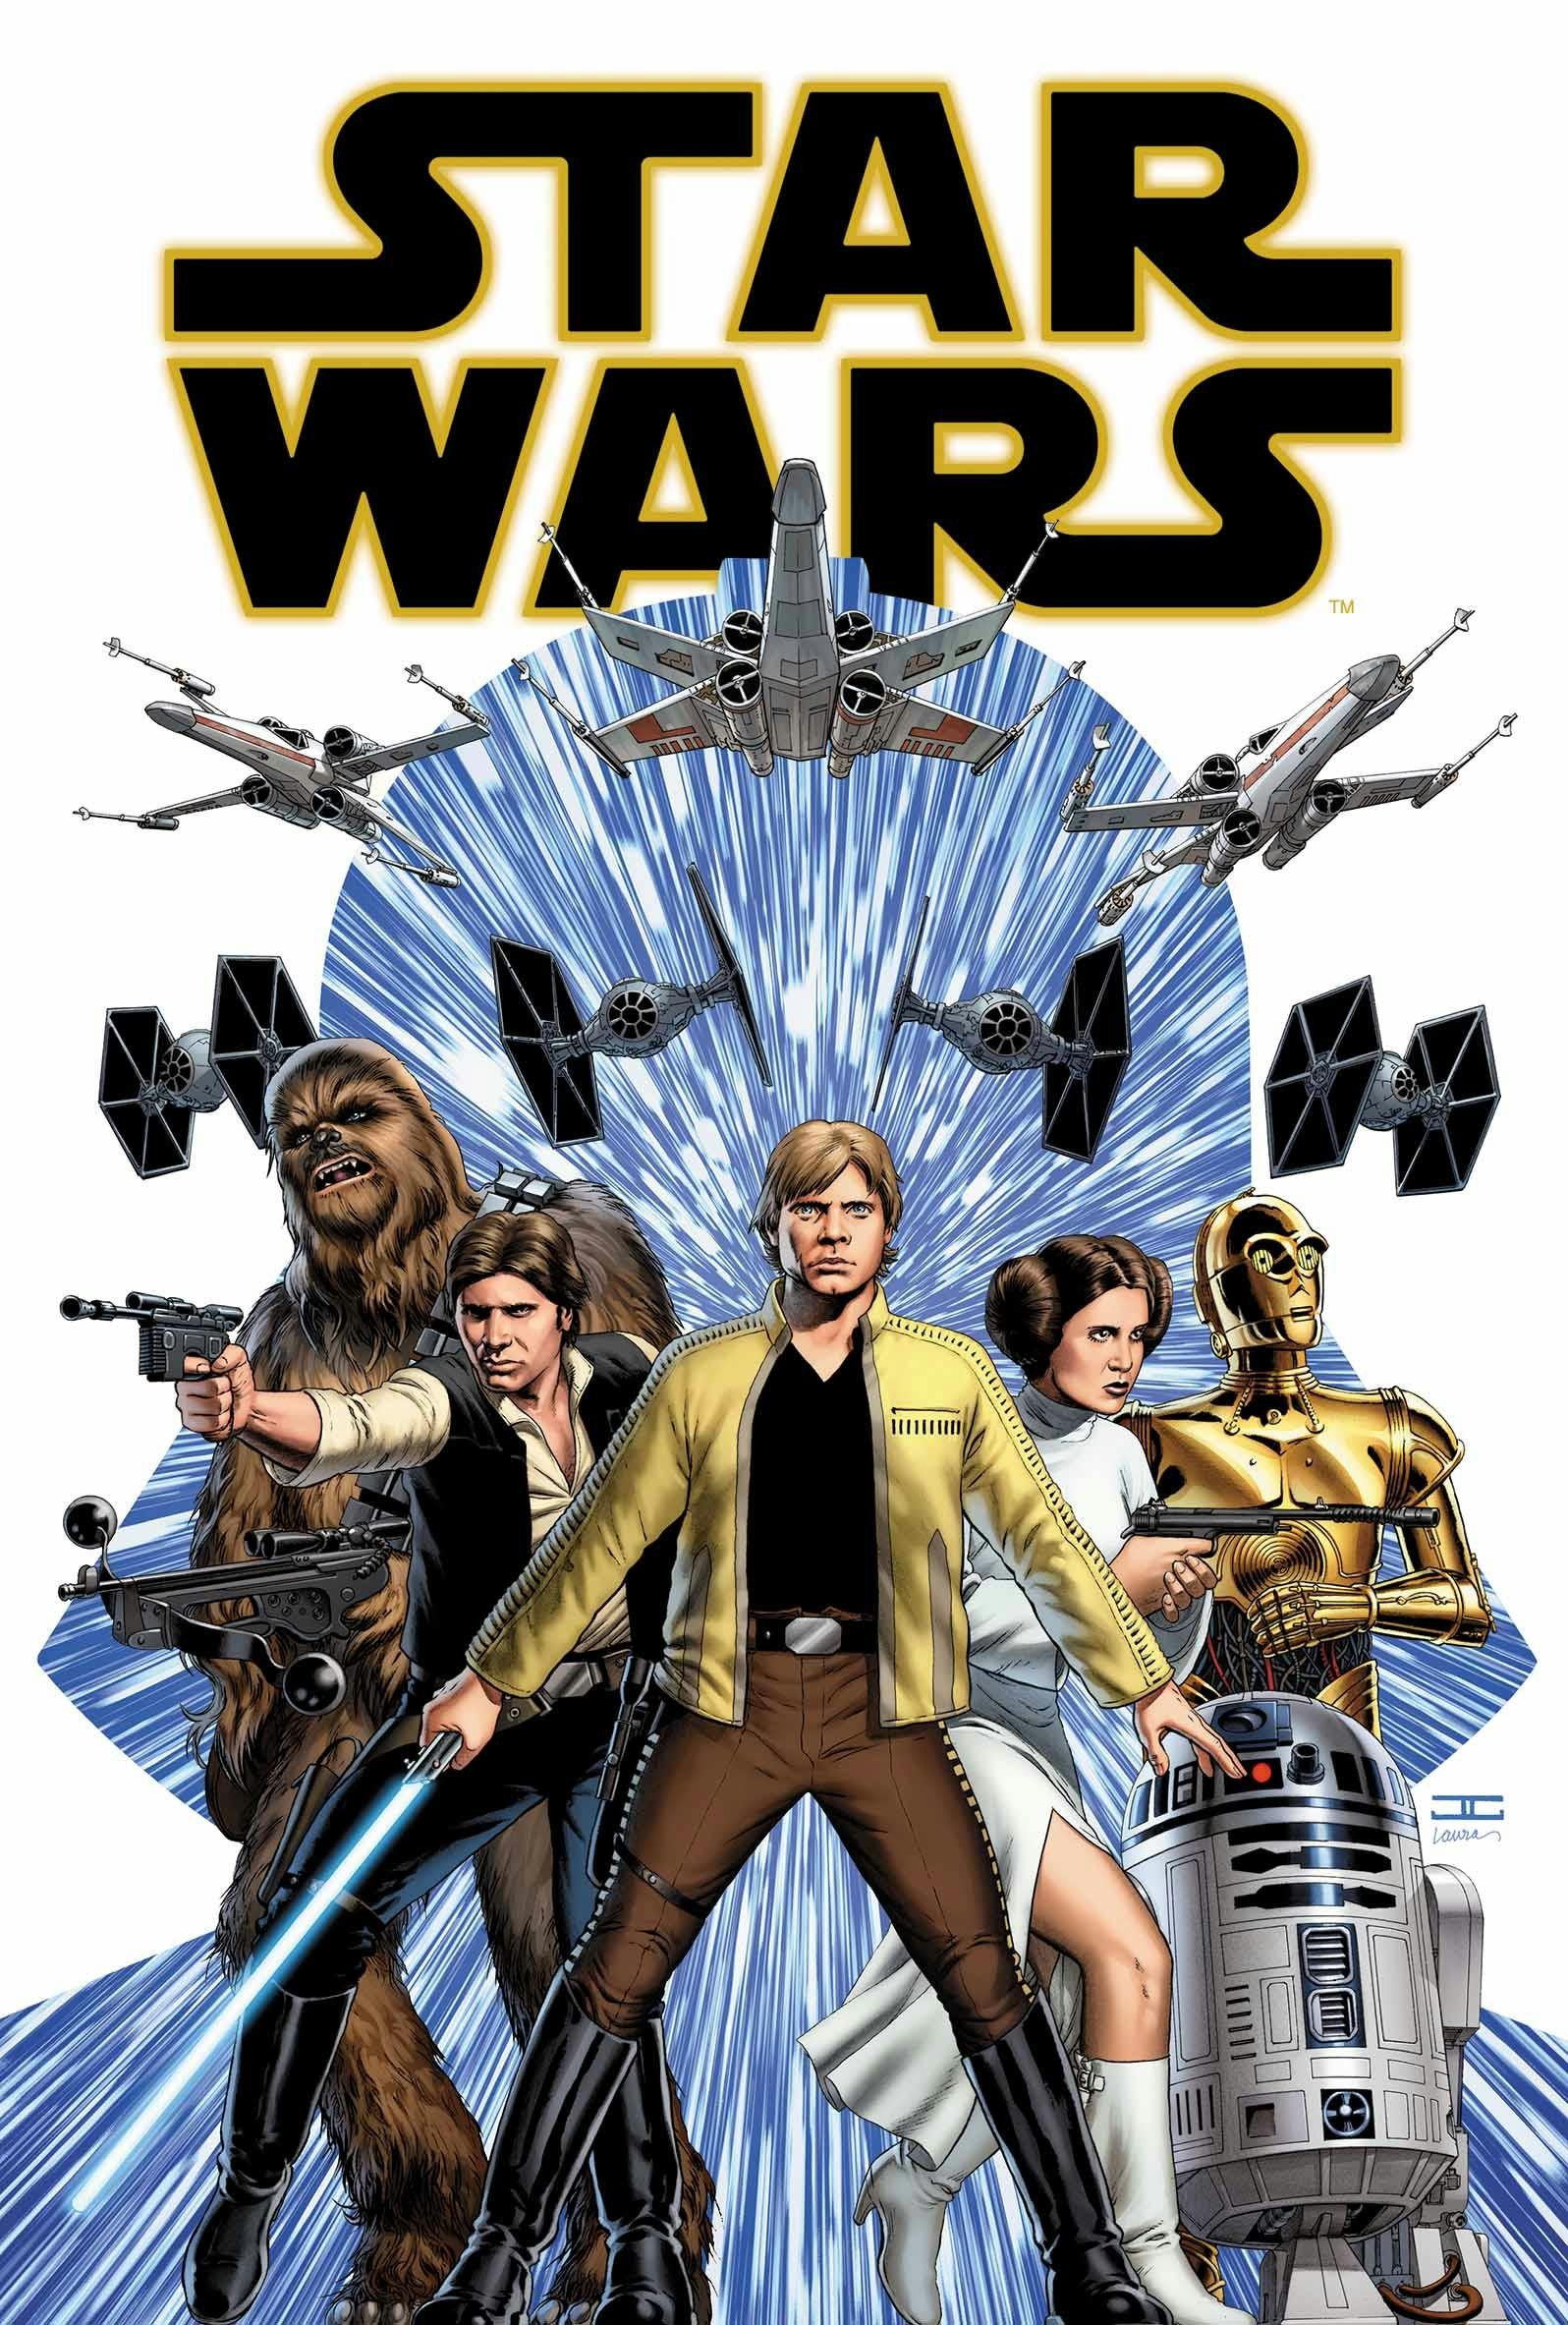 Star Wars #1 Main Cover.